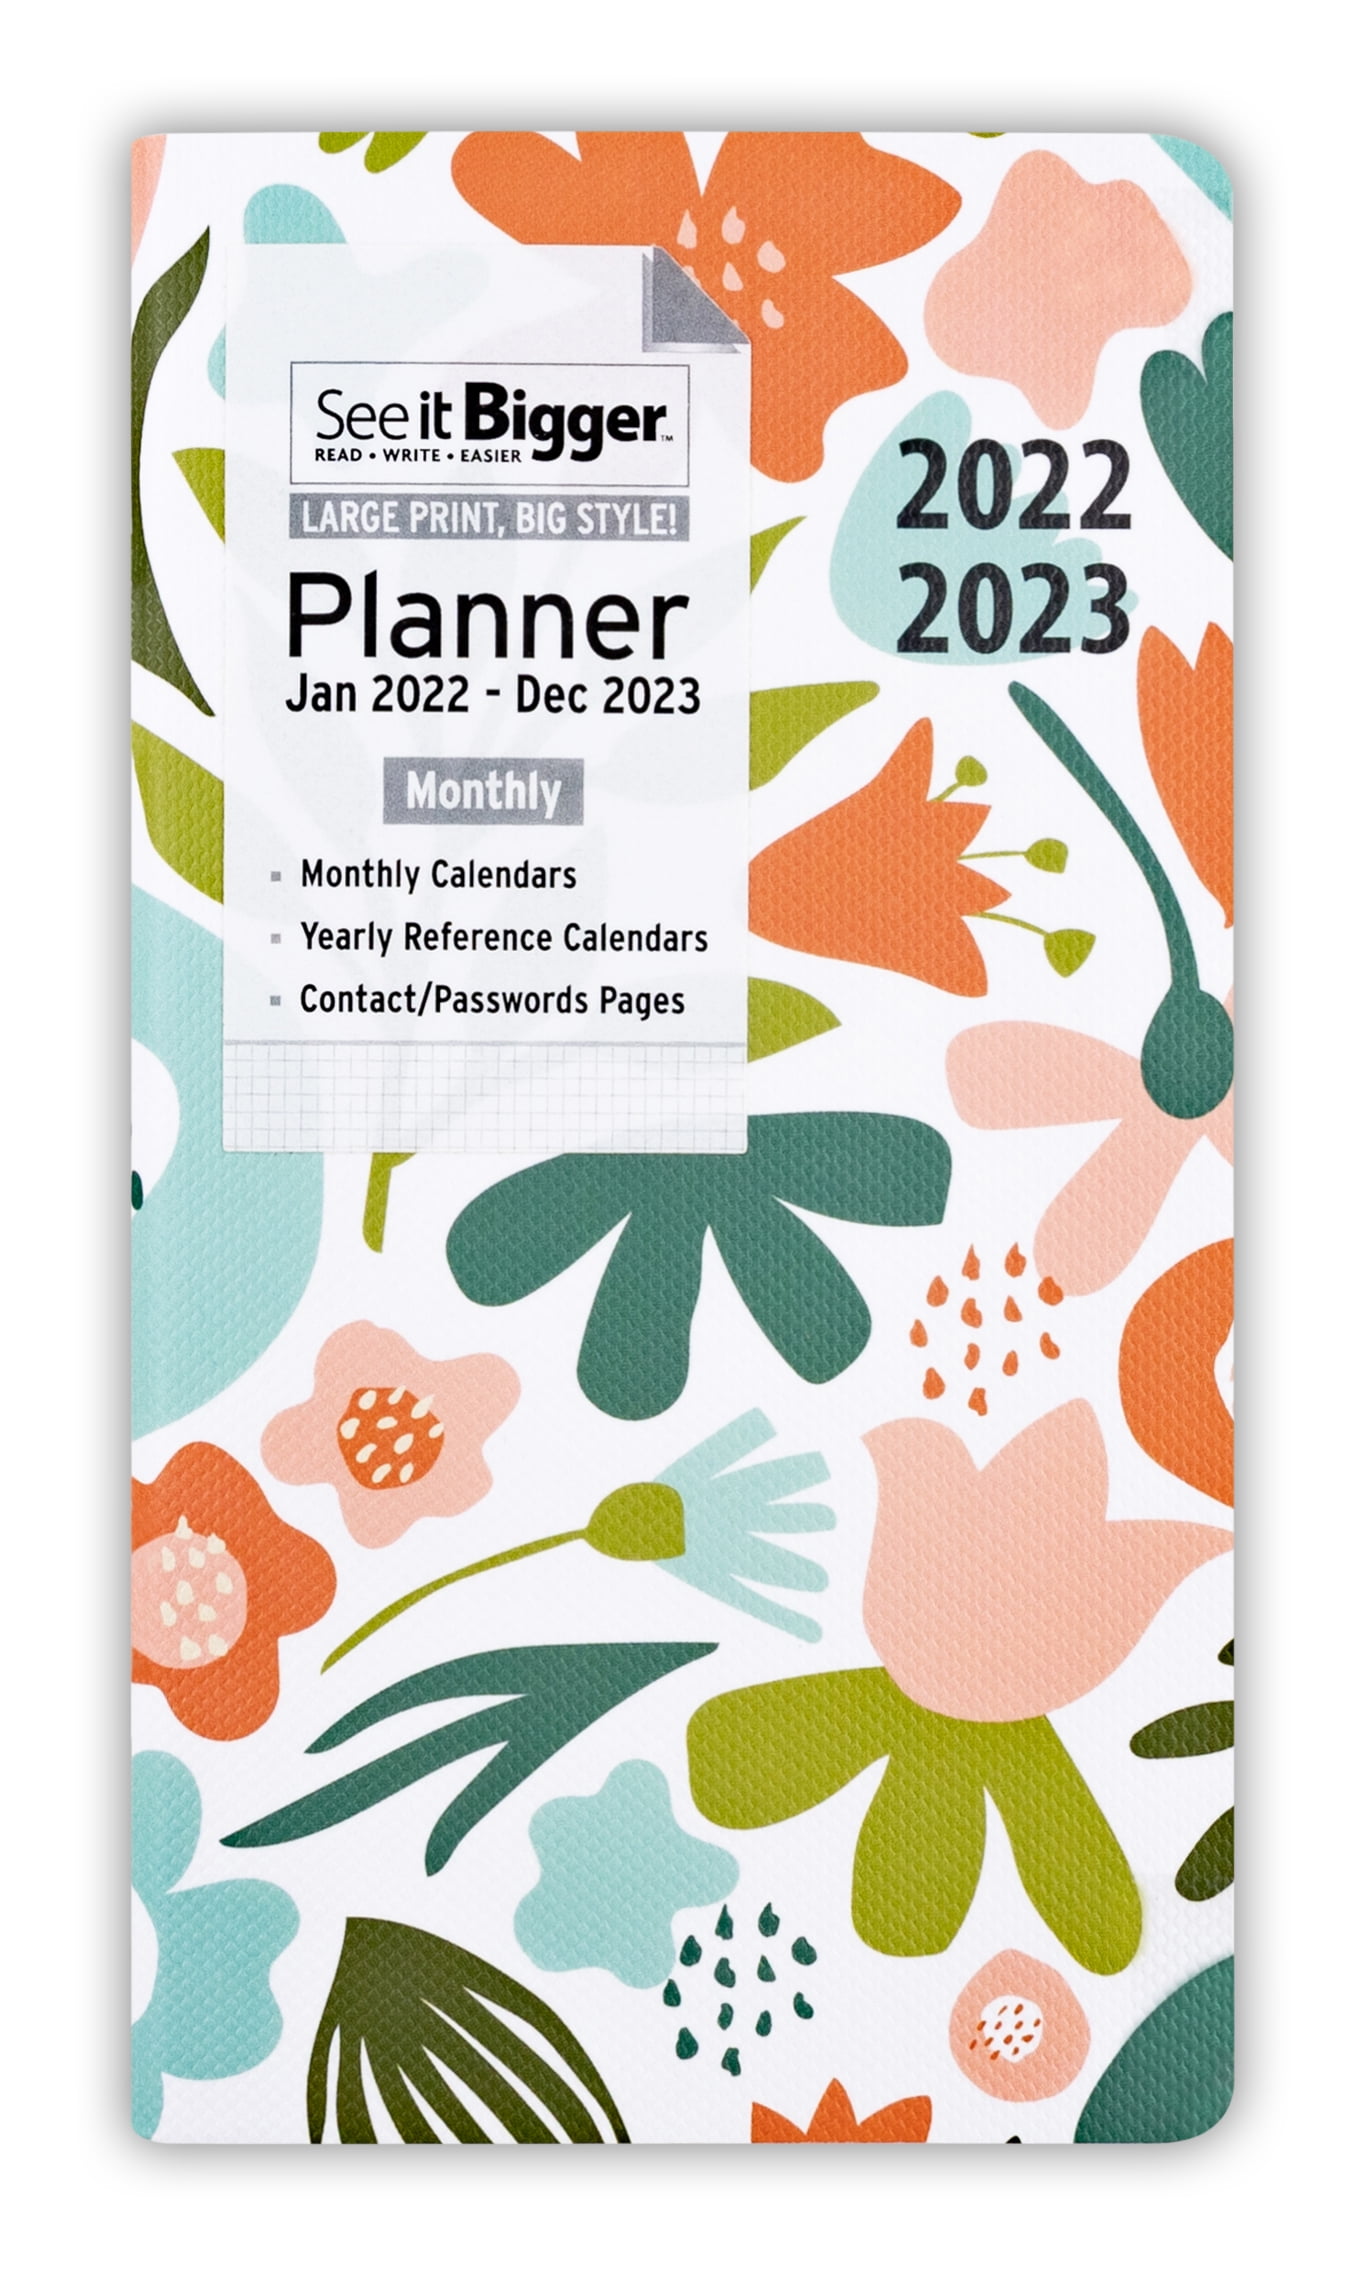 NEW 2018 Weekly Planner Calendar Pocket Purple Small Organizer 3.5 x 6.5 